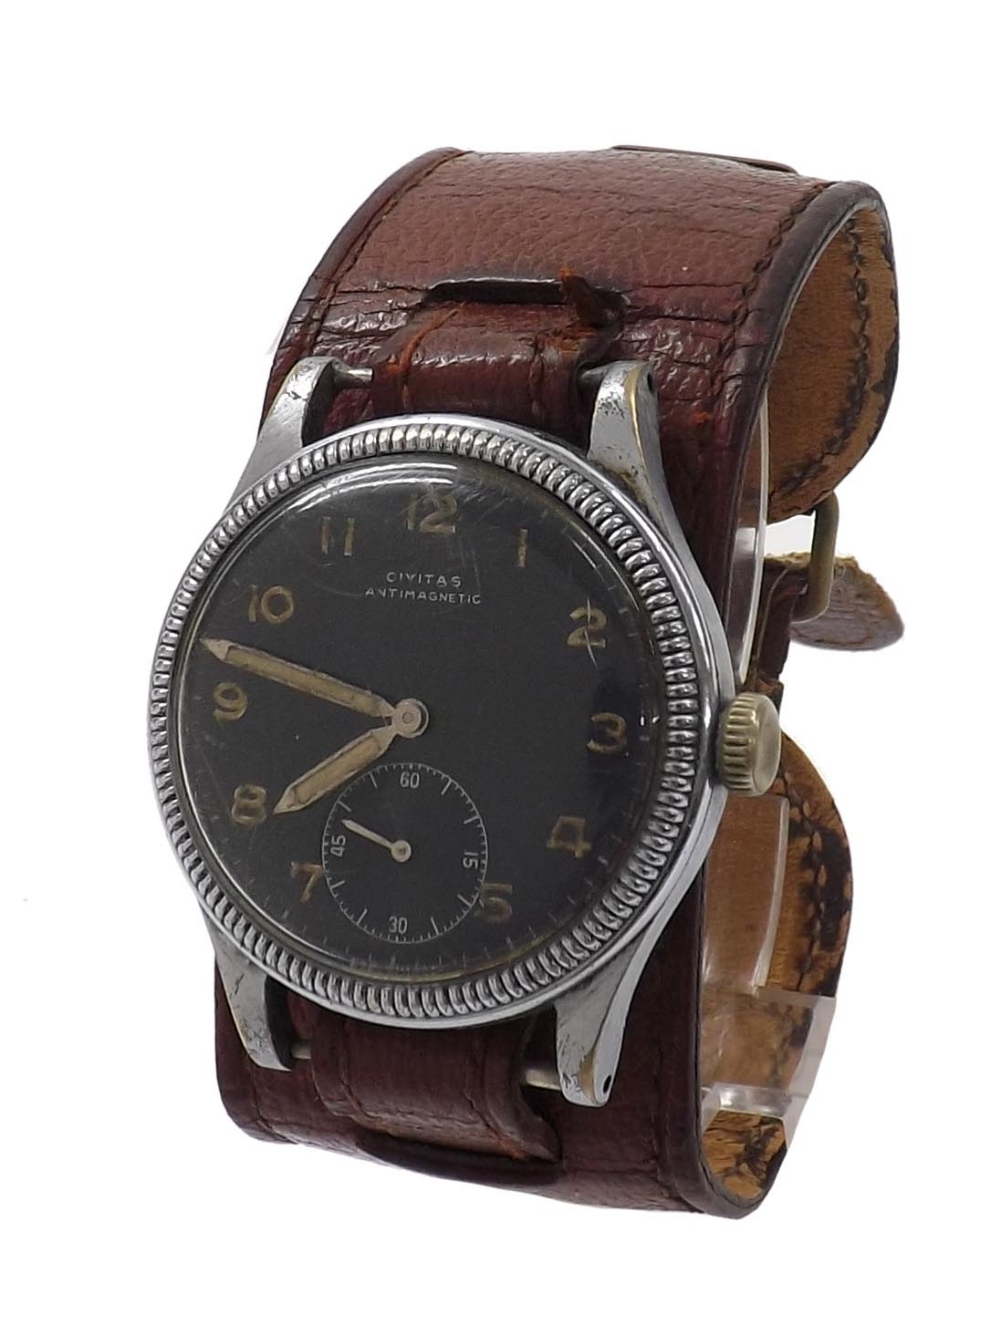 Civitas Military gentleman's wristwatch, case no. 2837275, circular black dial with Arabic numerals,